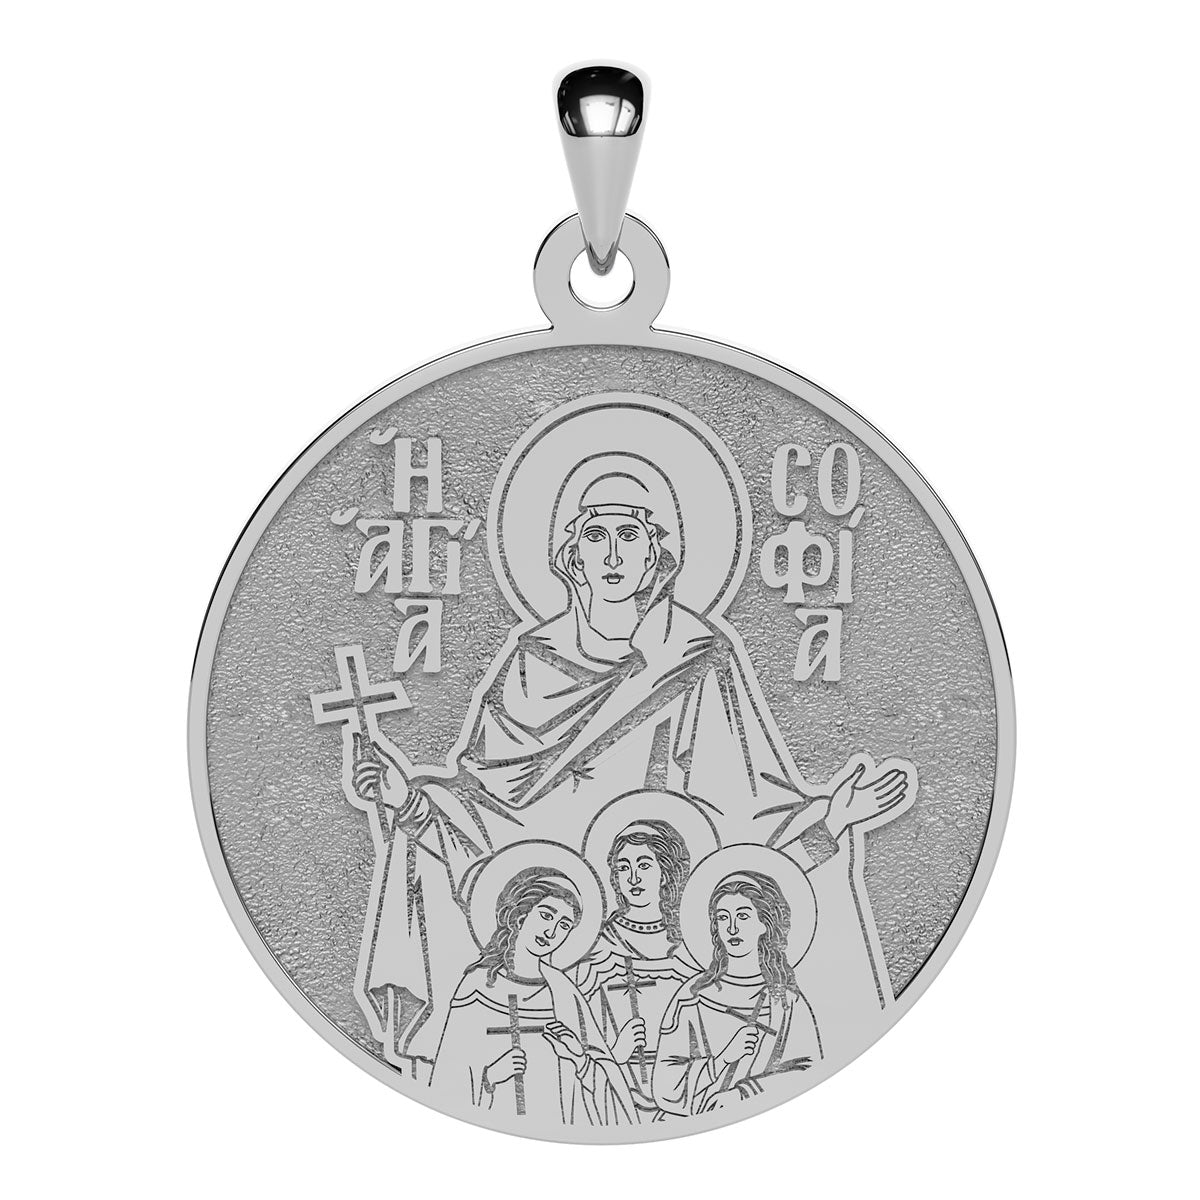 Saint Sophia (Sofia) the Martyr Greek Orthodox Icon Round Medal